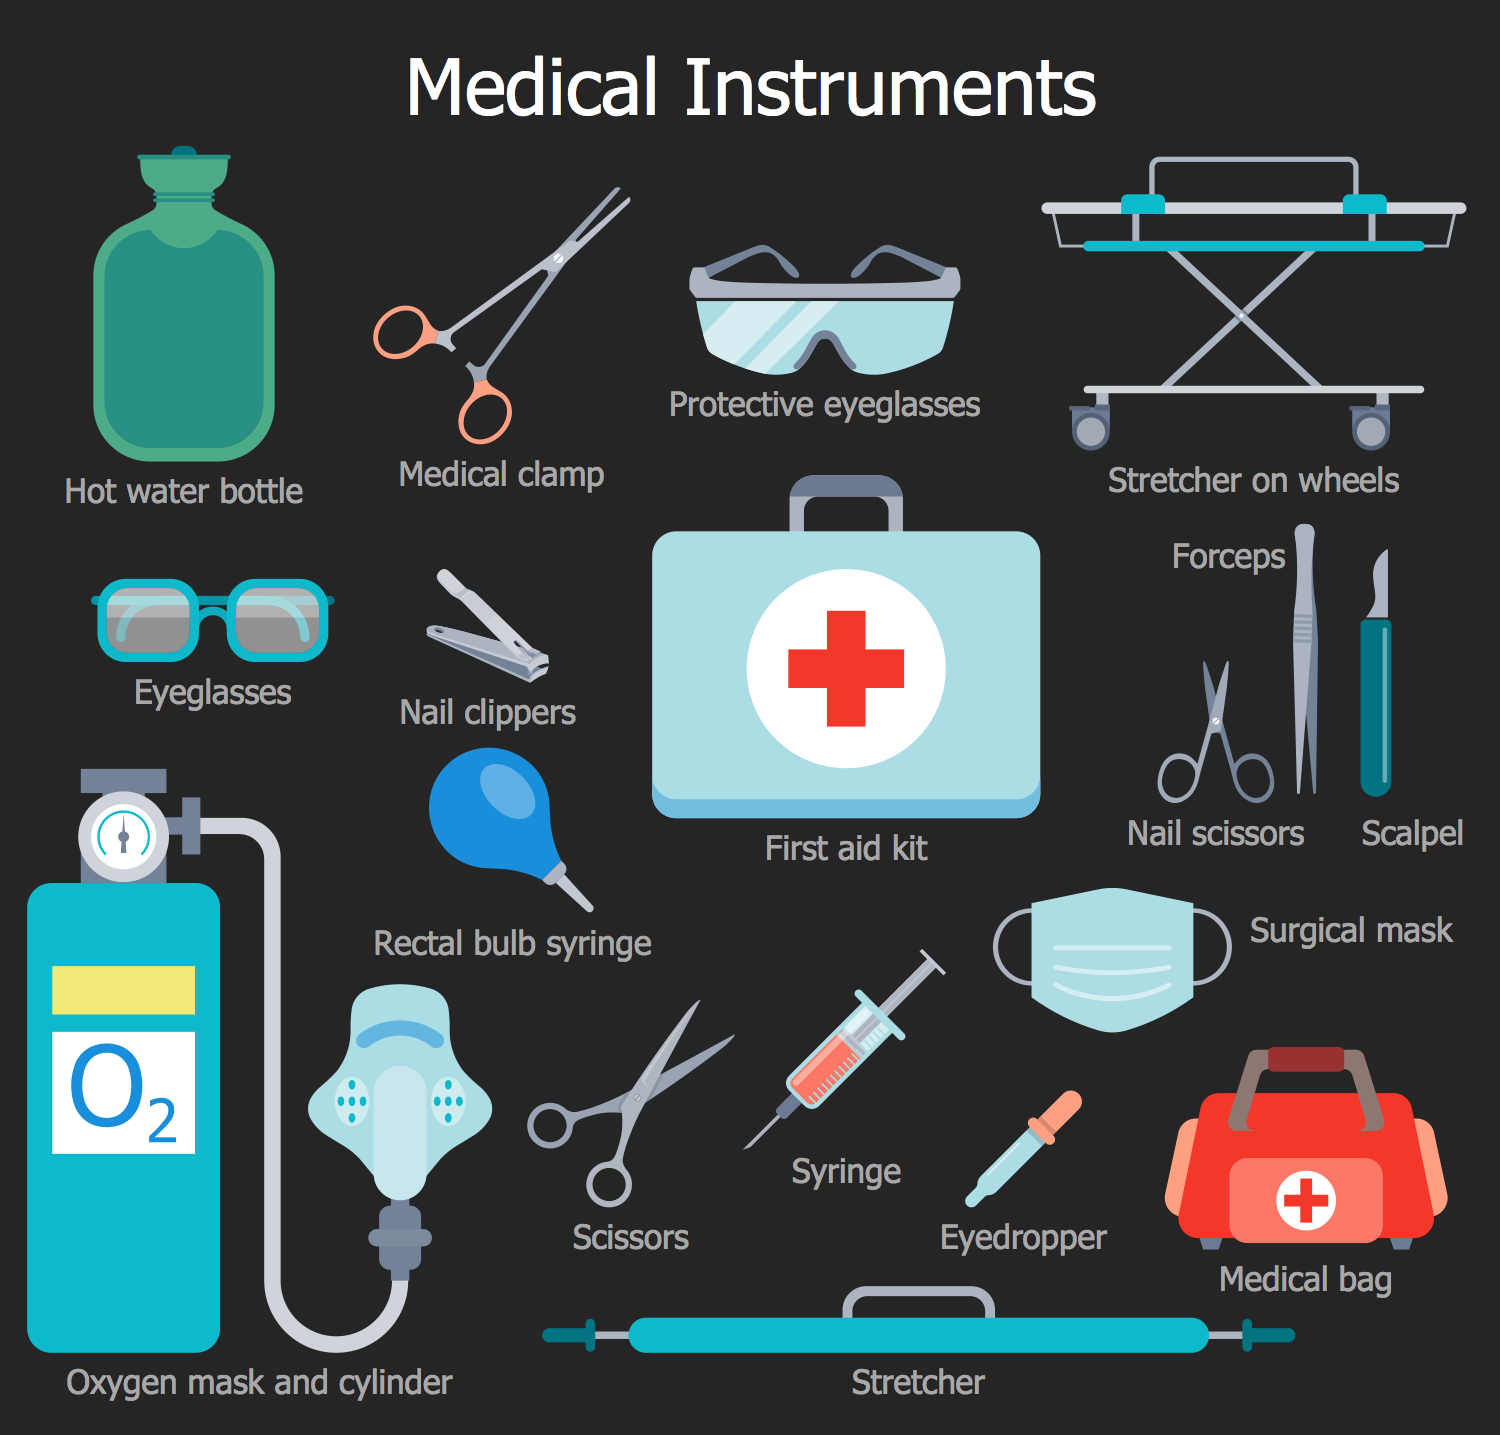 Medical instruments & Supplies